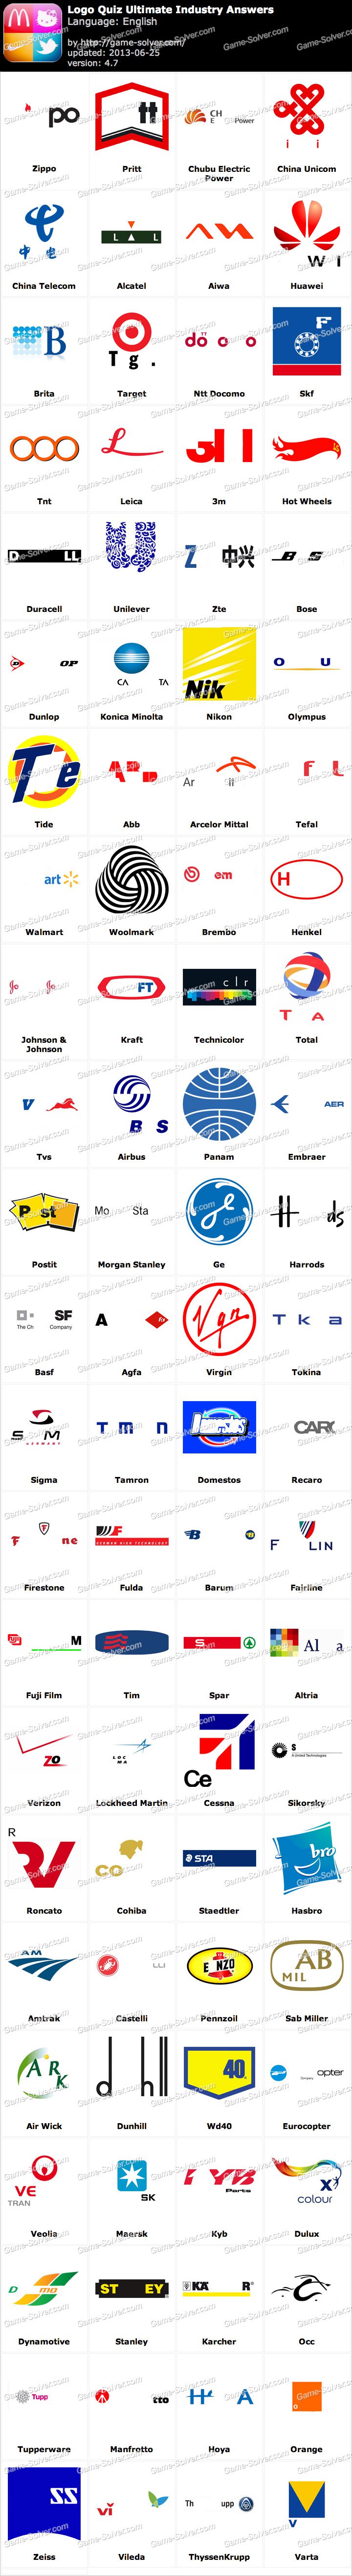 List Services Corporation Logo photo - 1